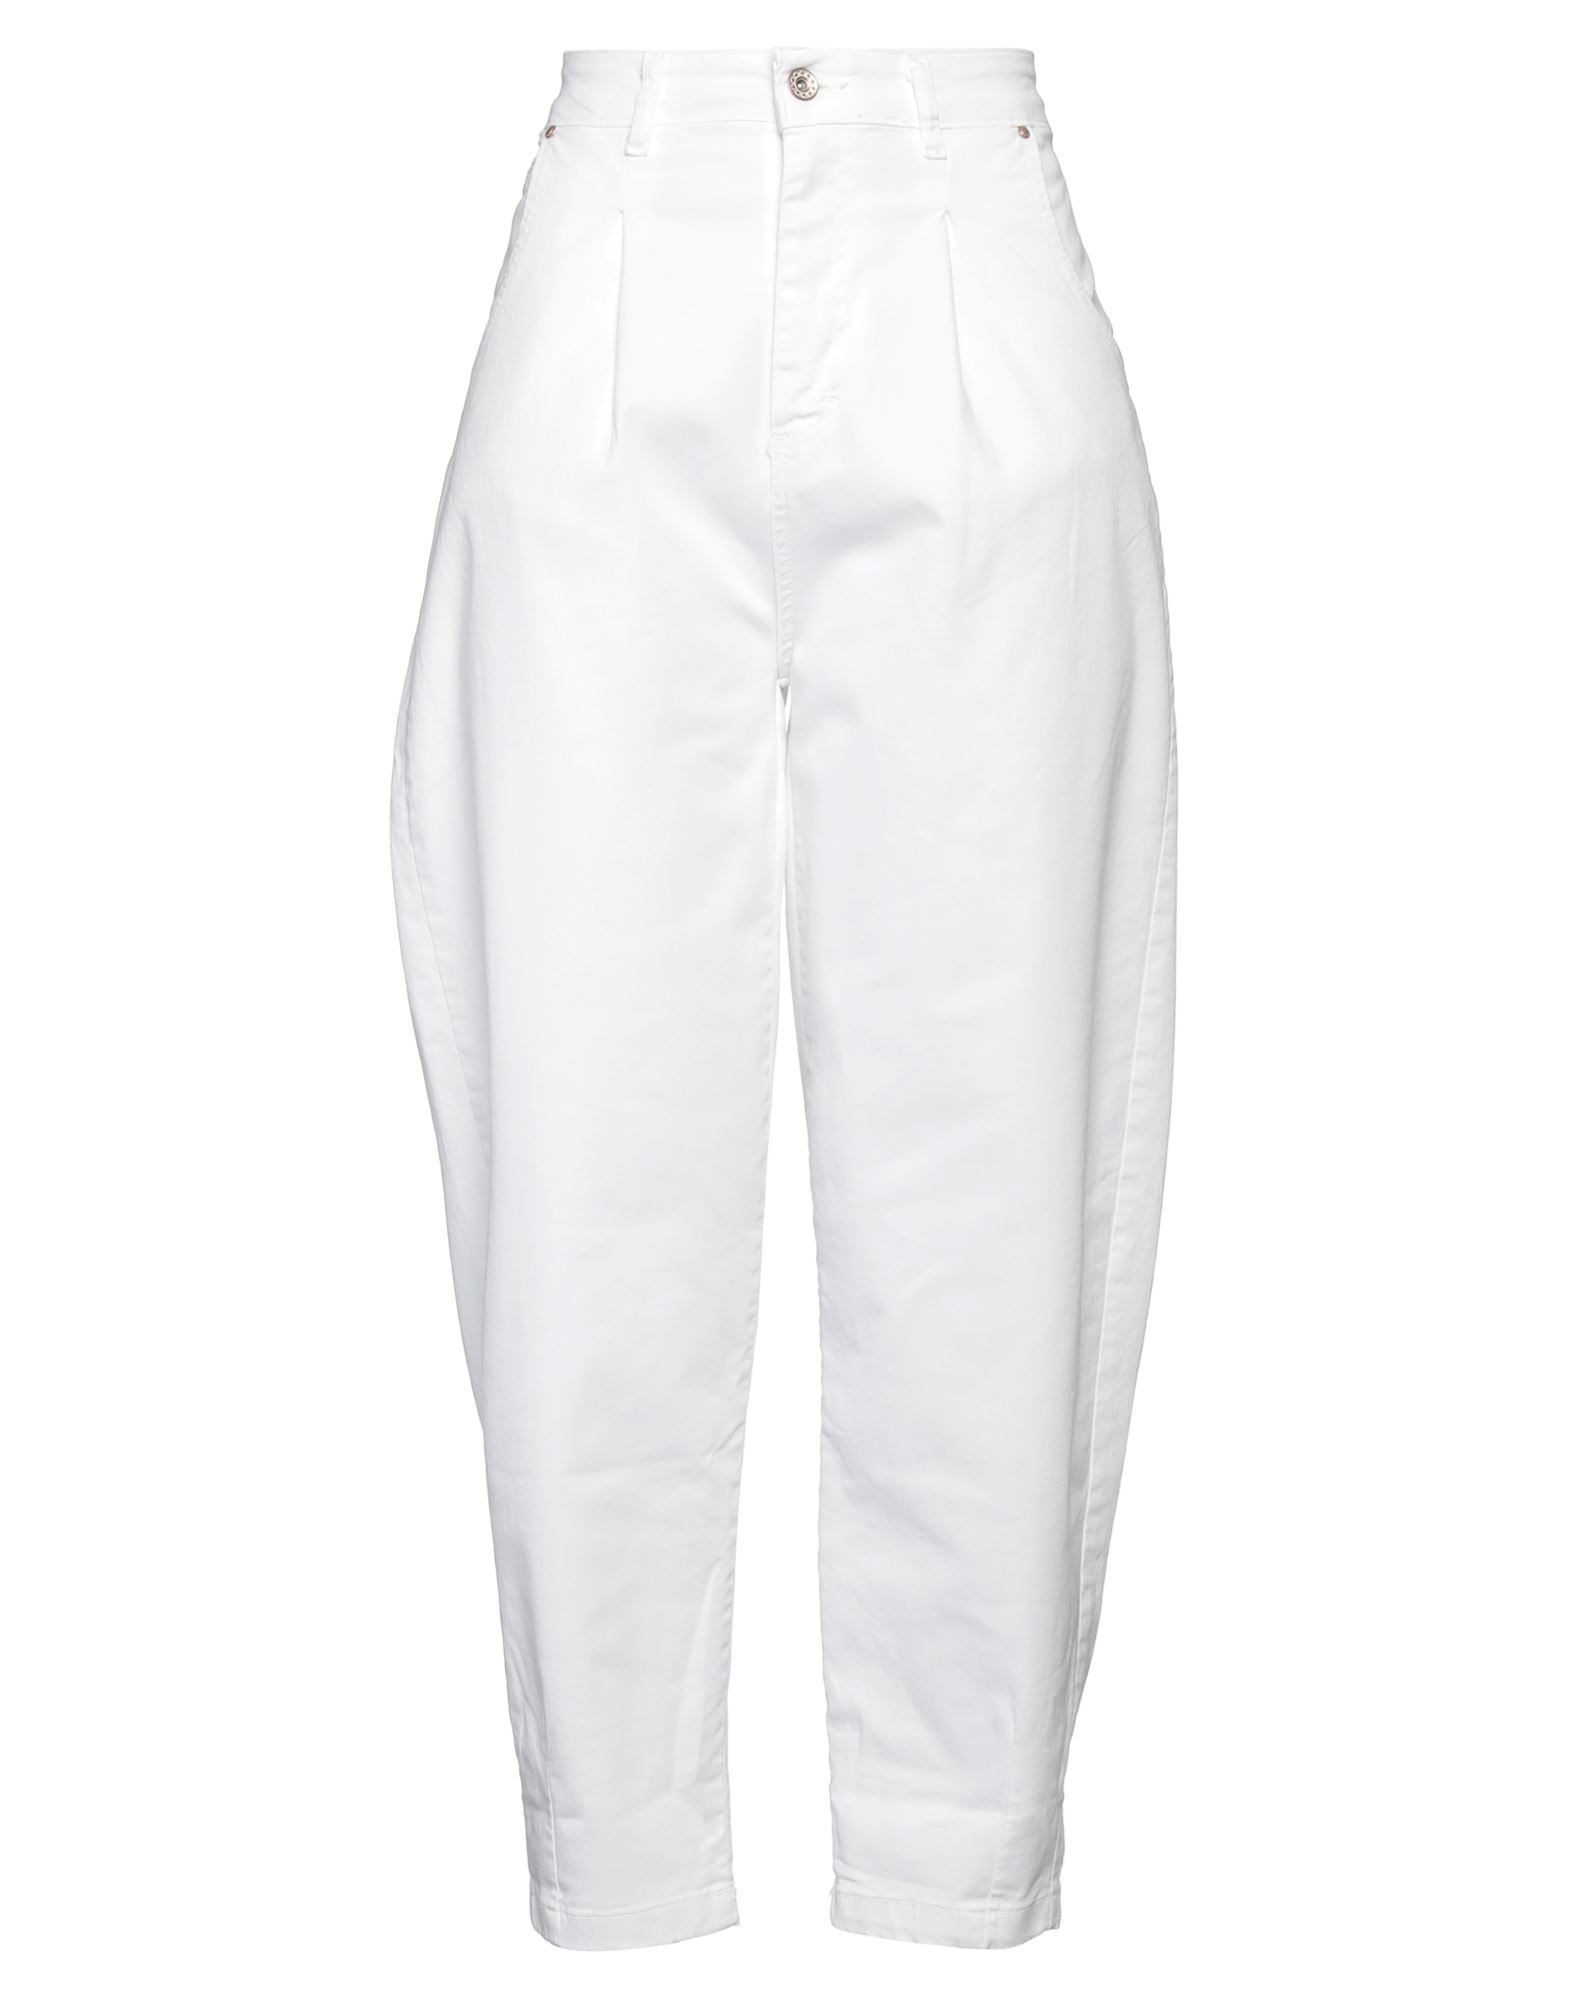 B.yu Pants In White